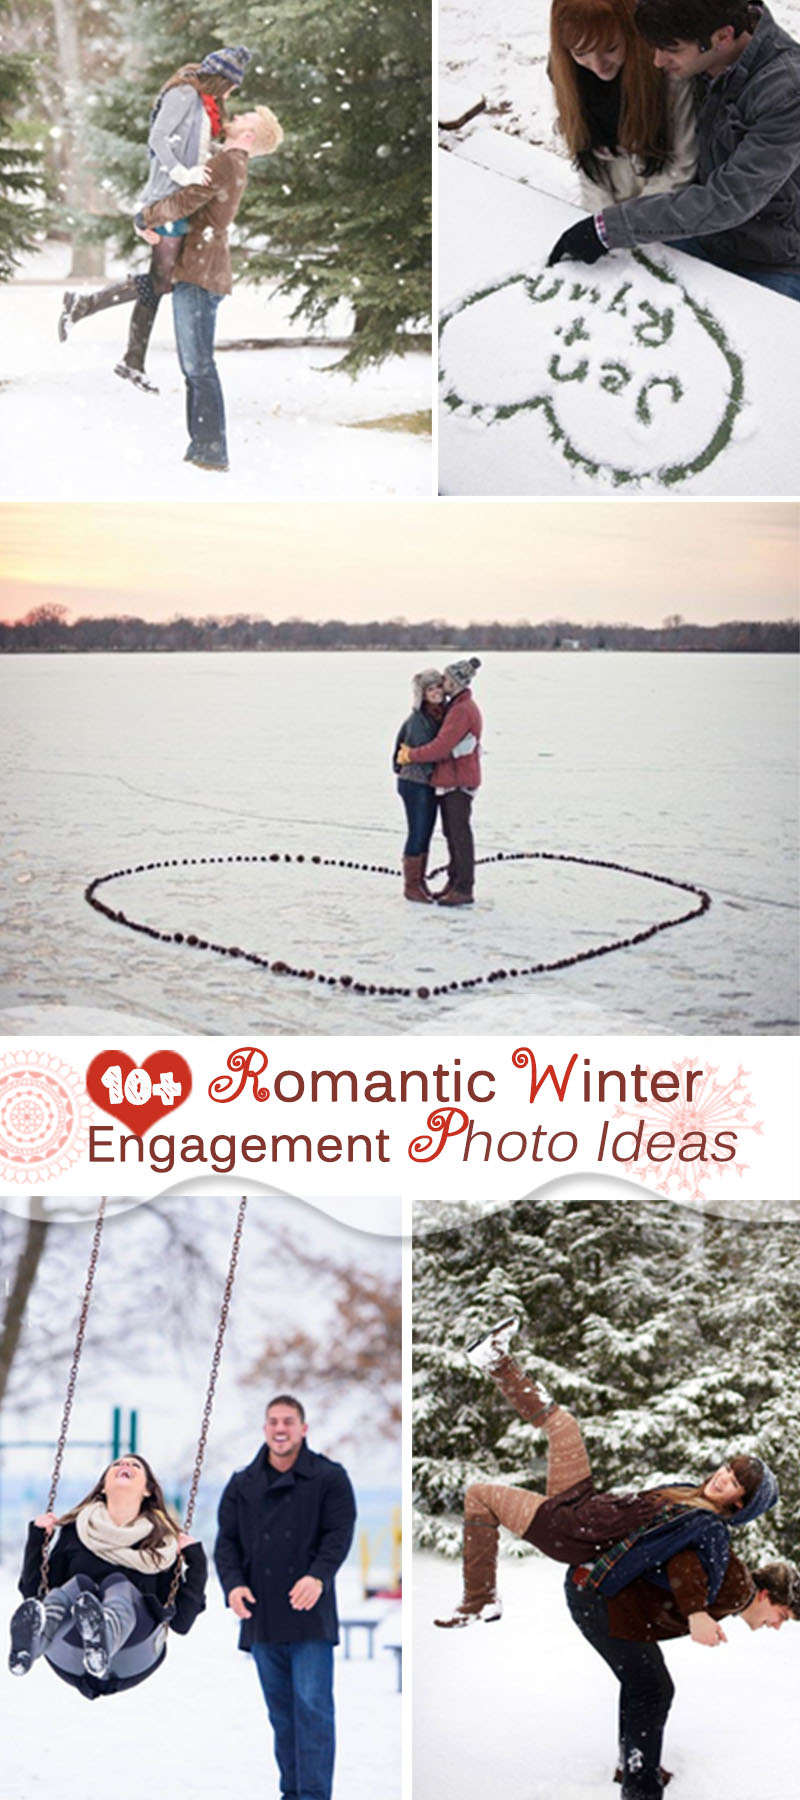 Romantic Winter Engagement Photo Ideas!